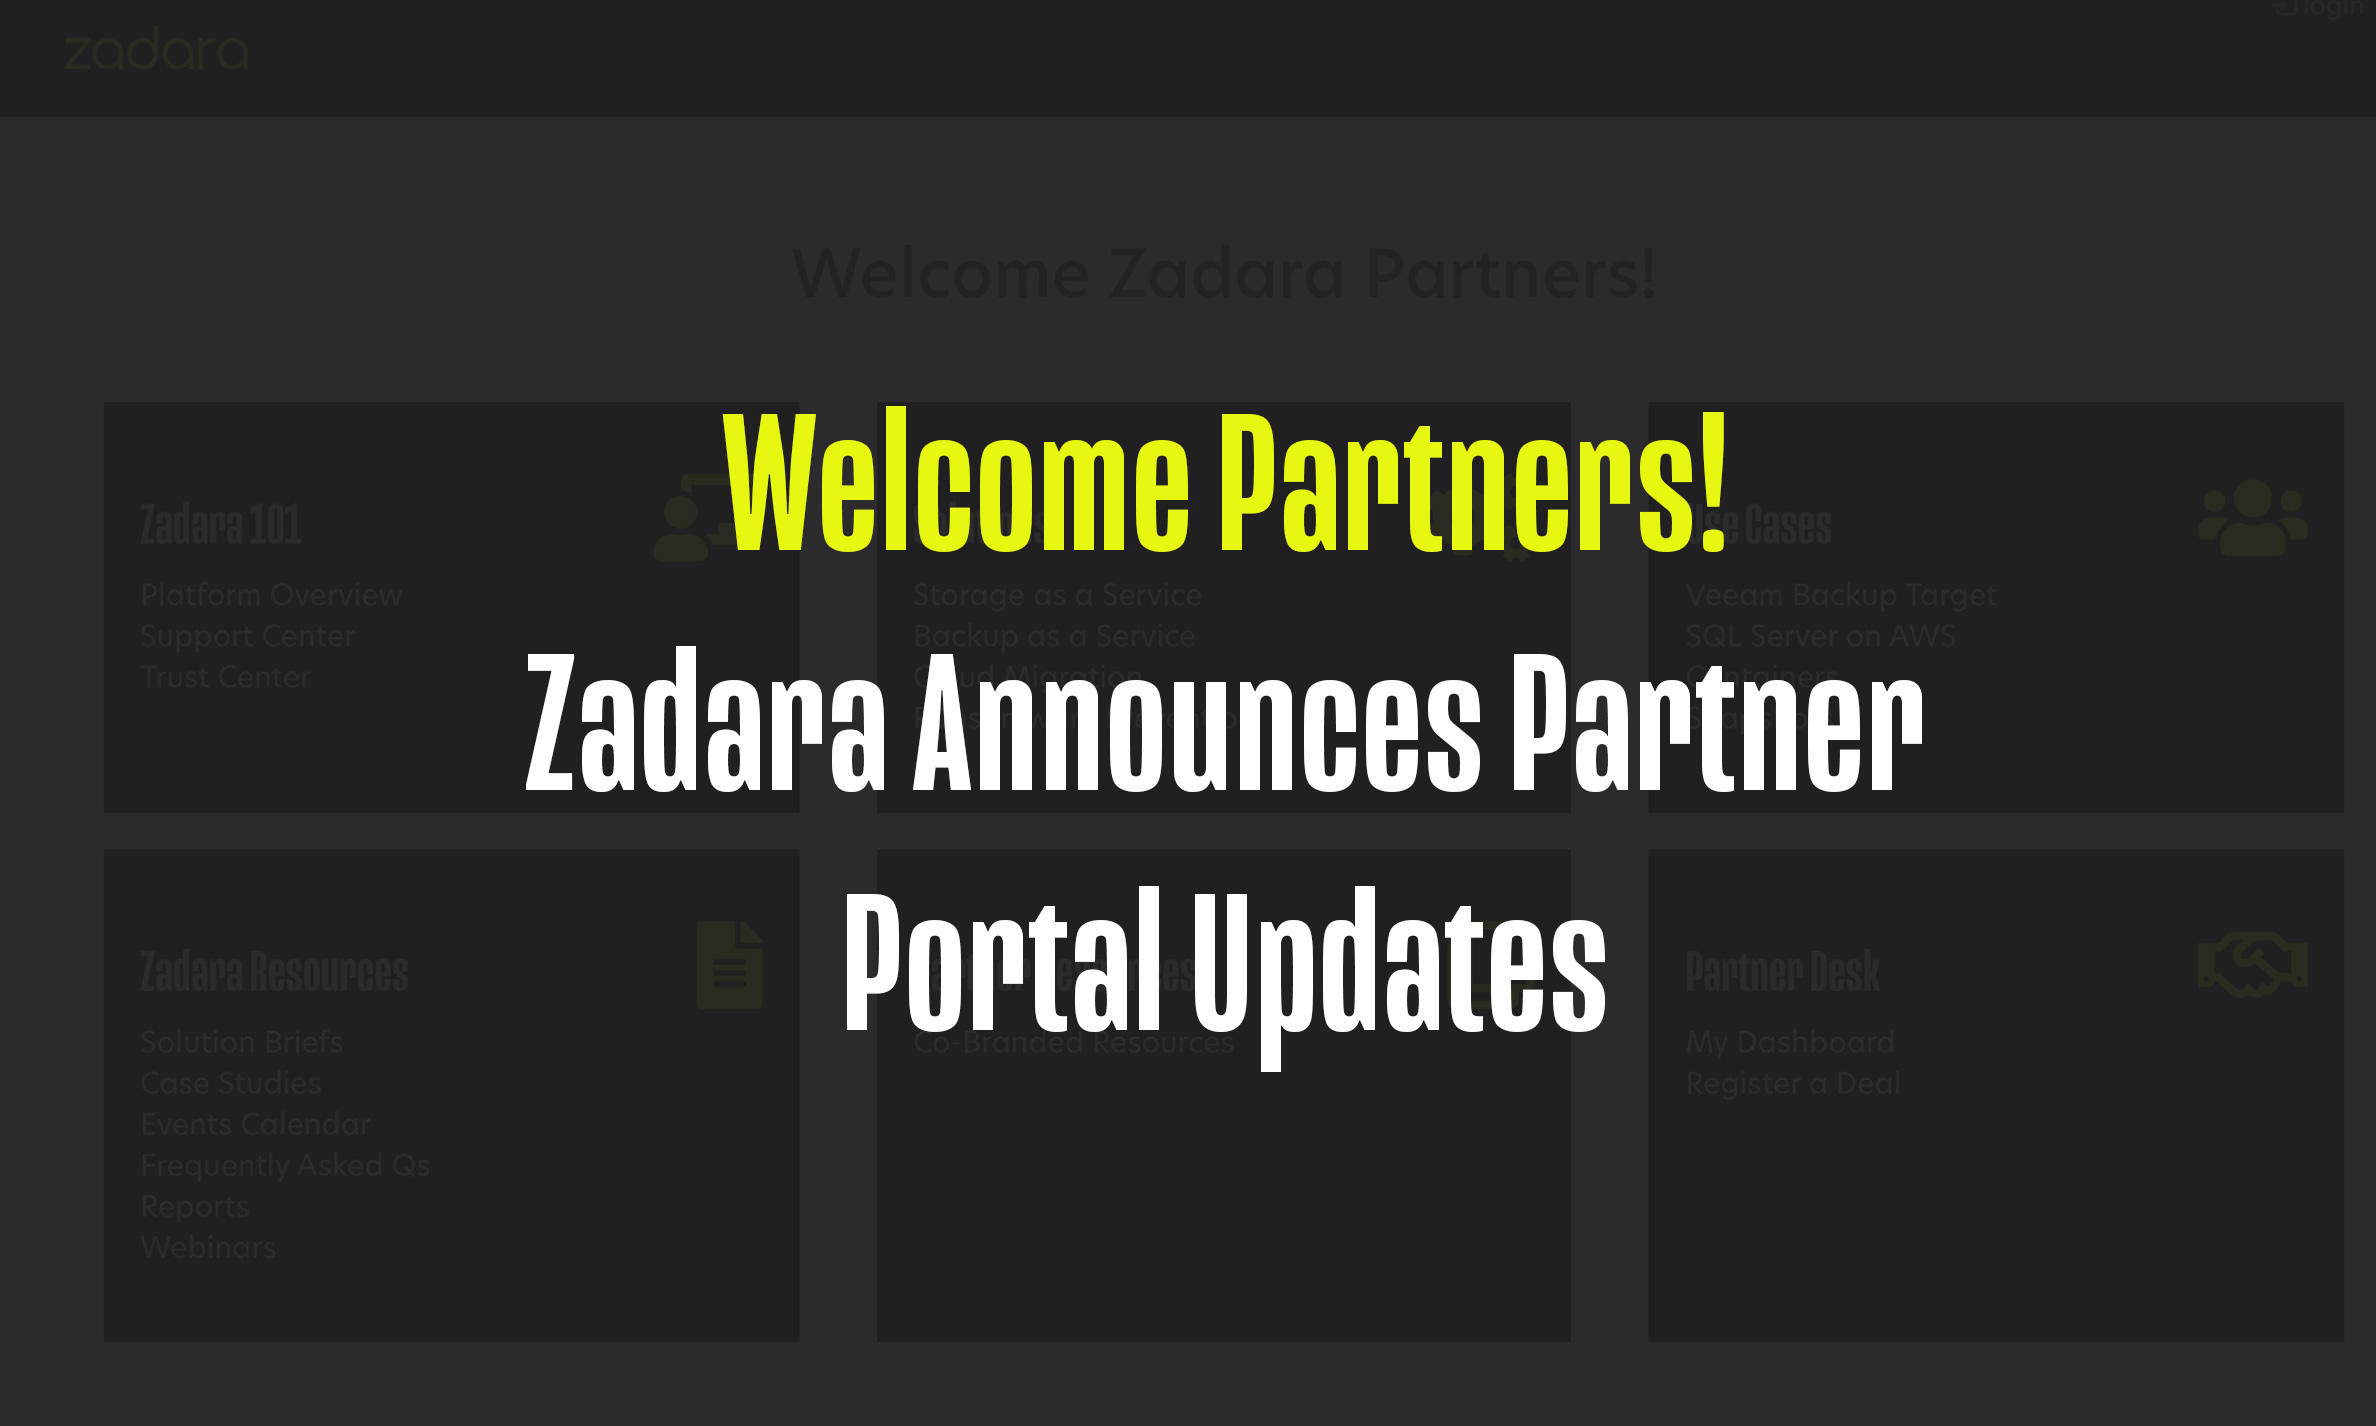 Welcome Partners! Zadara Announces Partner Portal Updates